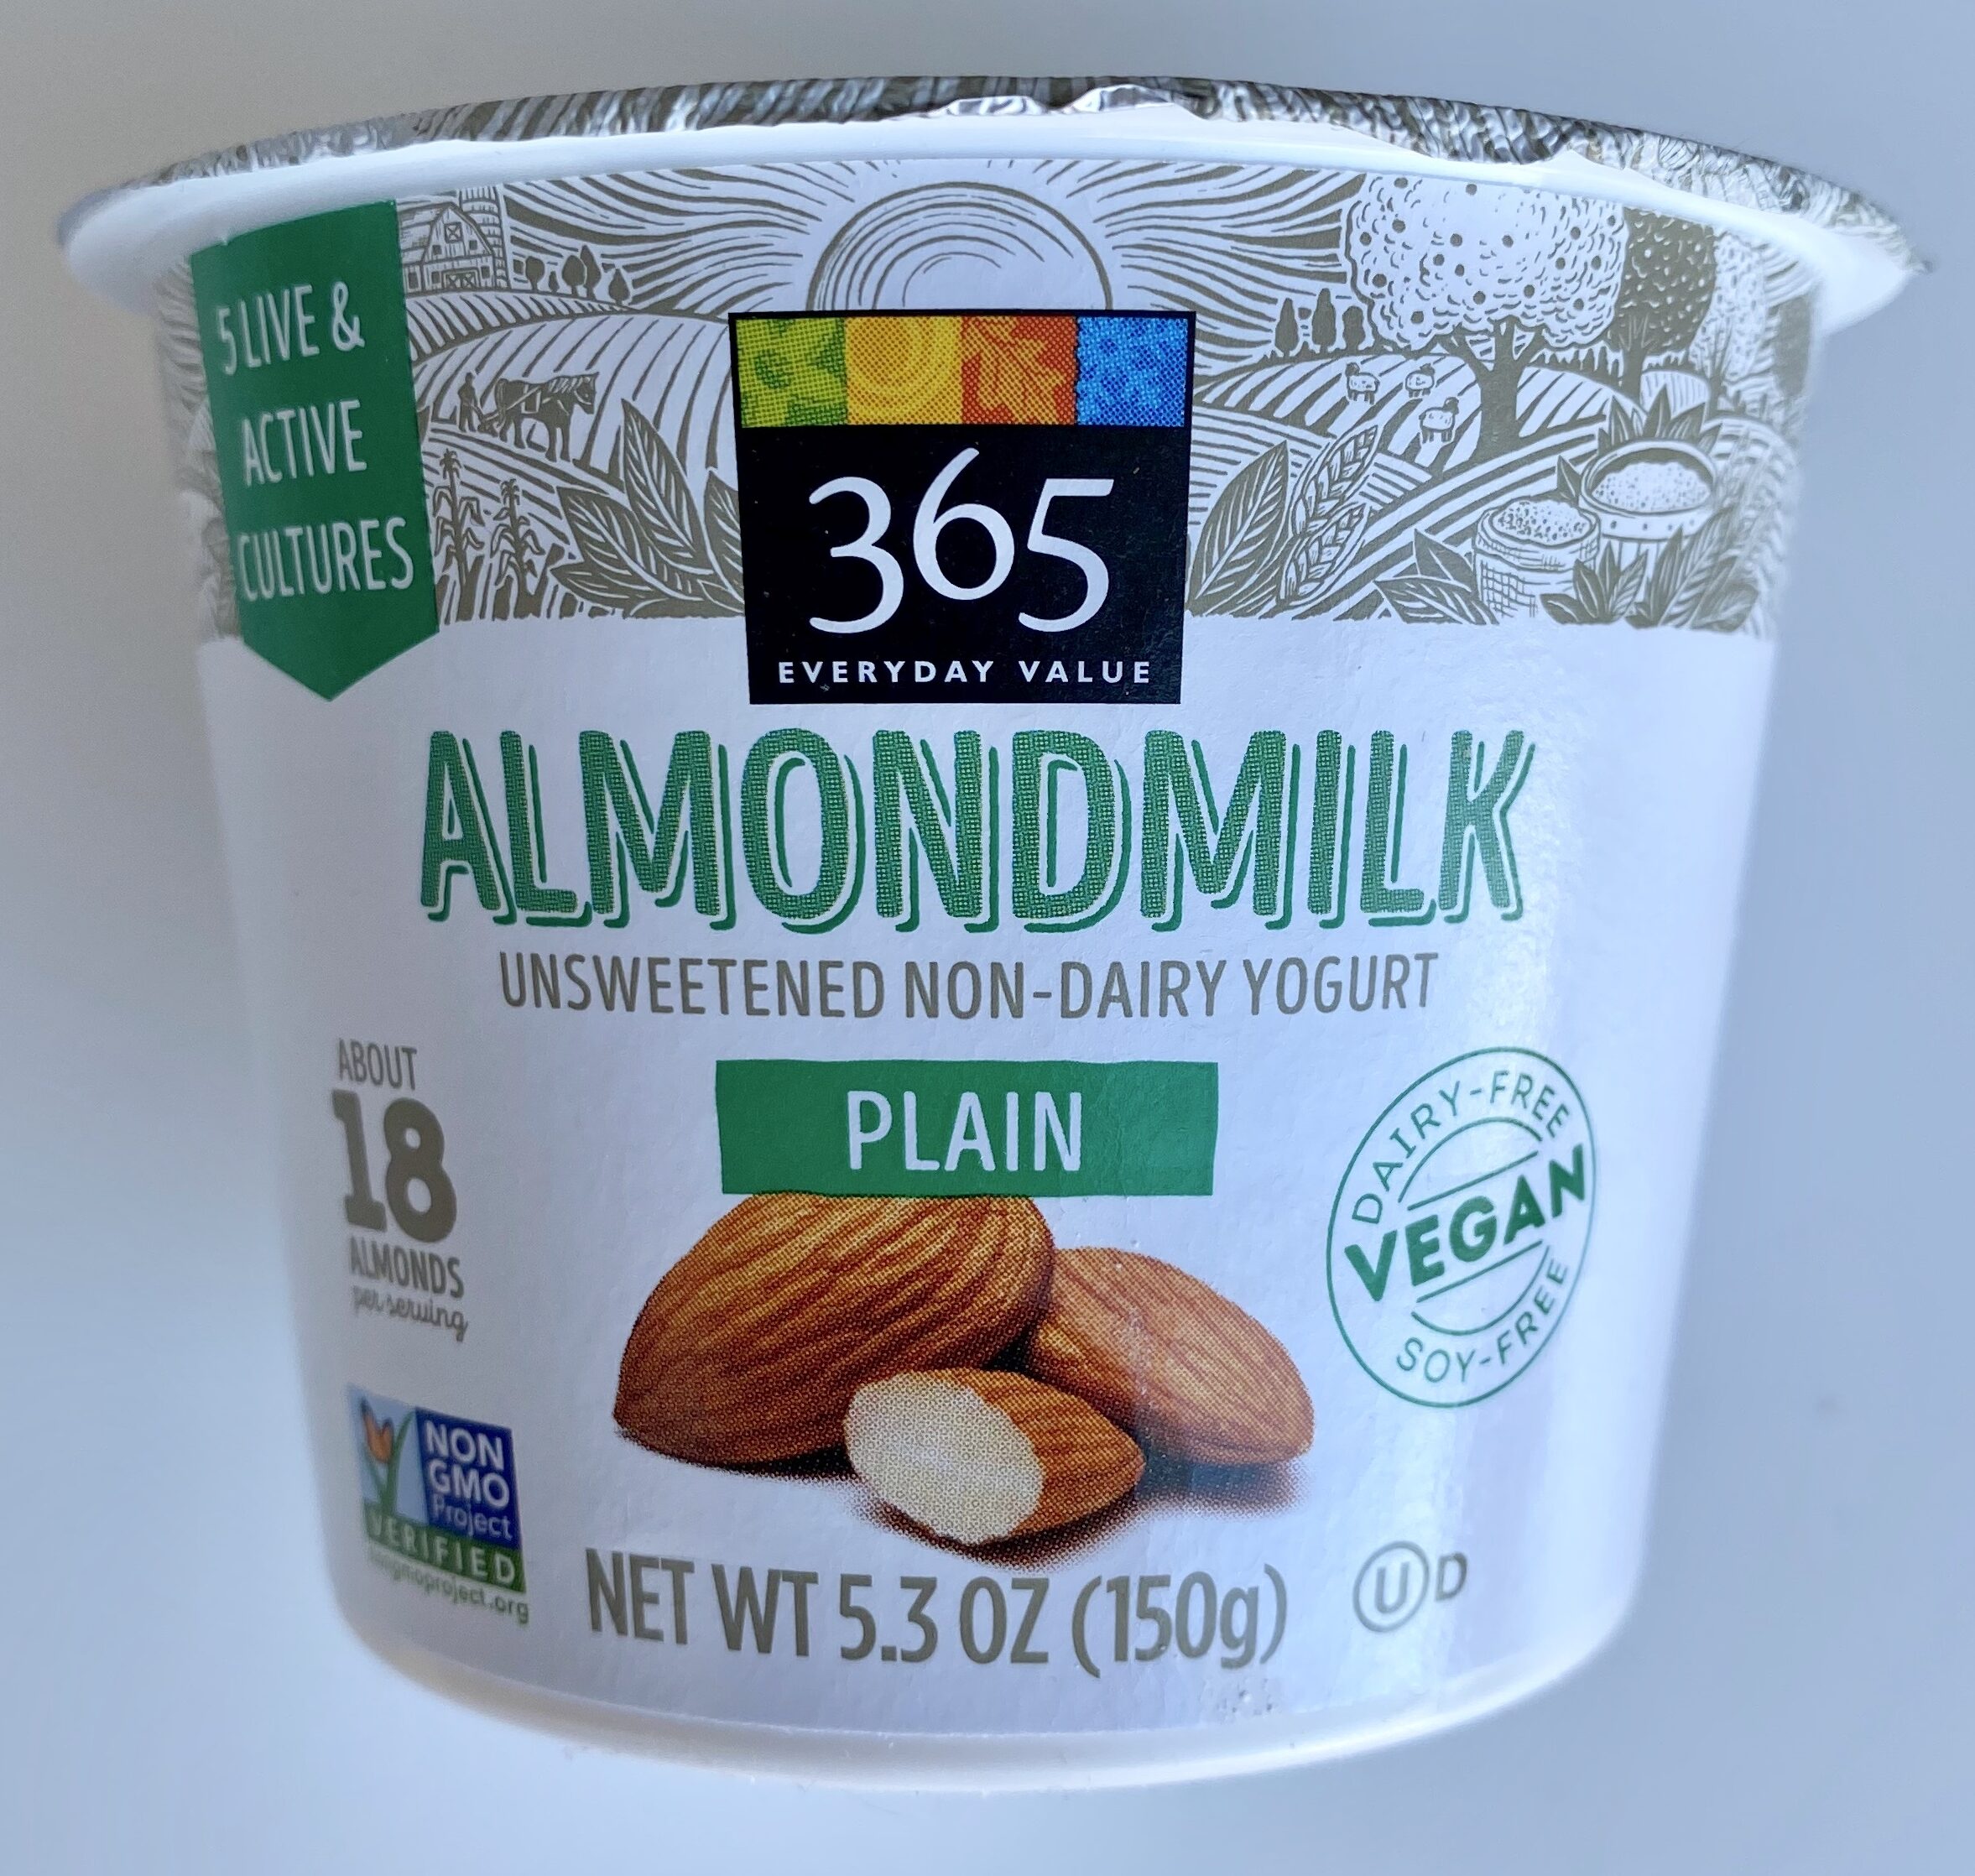 Plain almondmilk unsweetened non-dairy yogurt, plain almondmilk - 365  Everyday Value - 150g